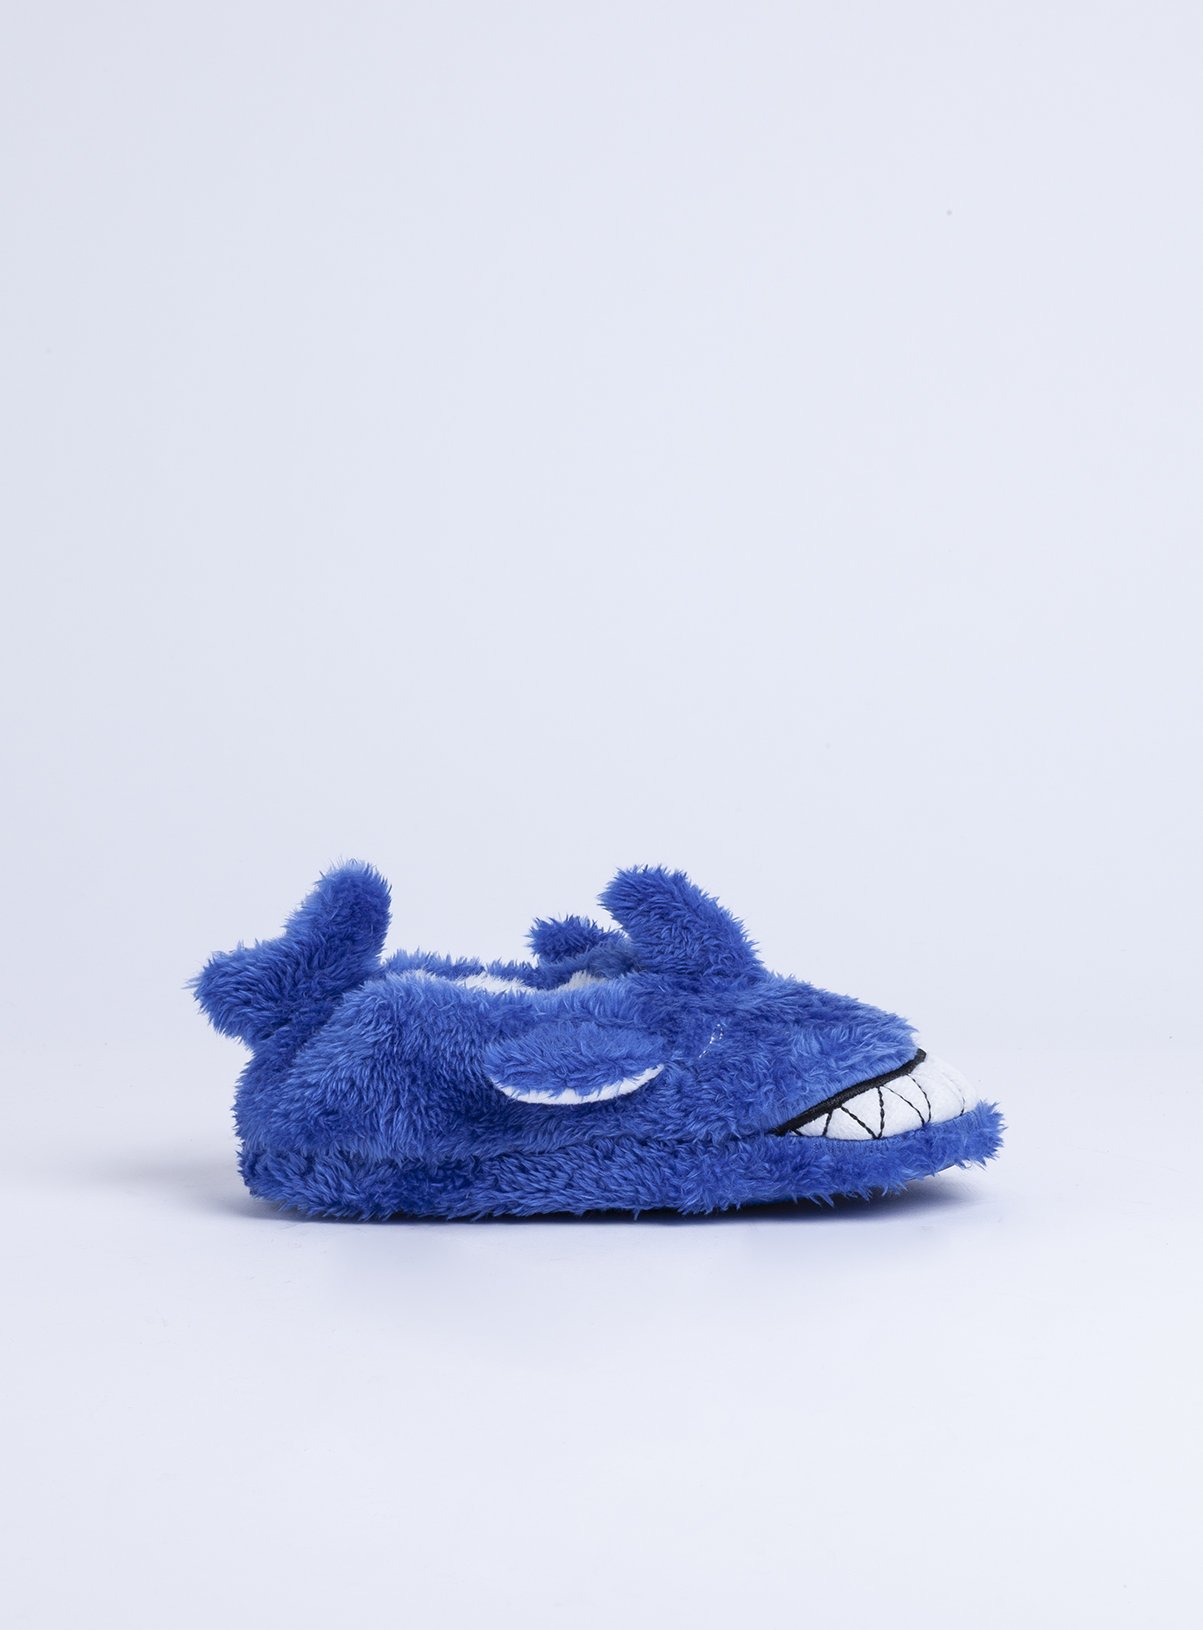 blue fluffy slippers